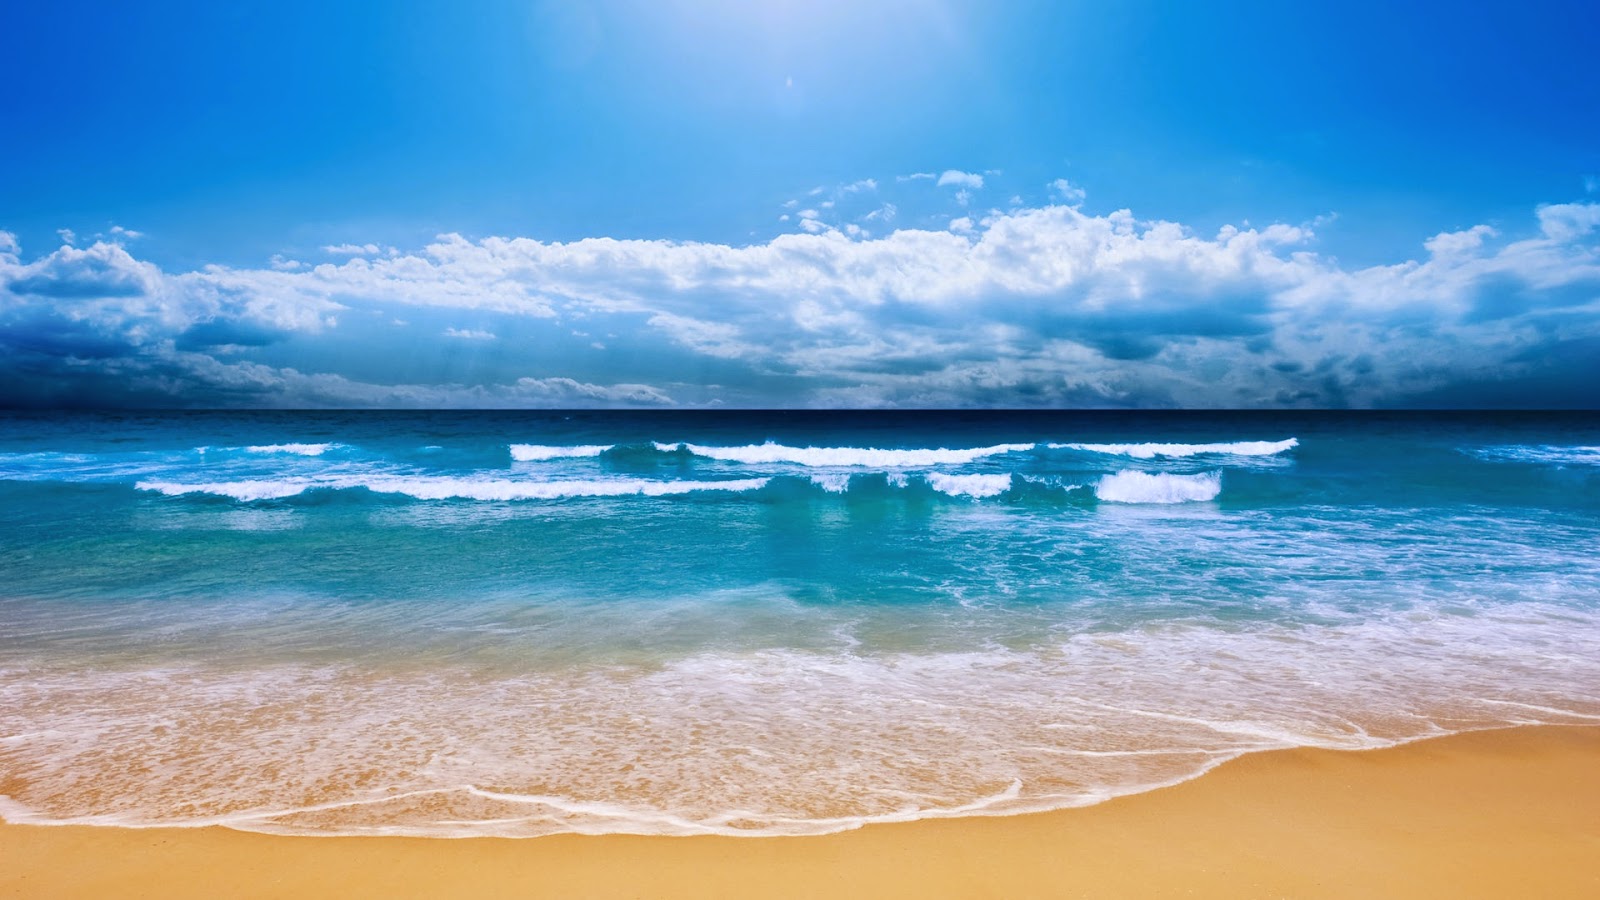 #uh8b336 Most Beautiful Beaches Desktop Wallpaper - Hd Wallpapers 1080p